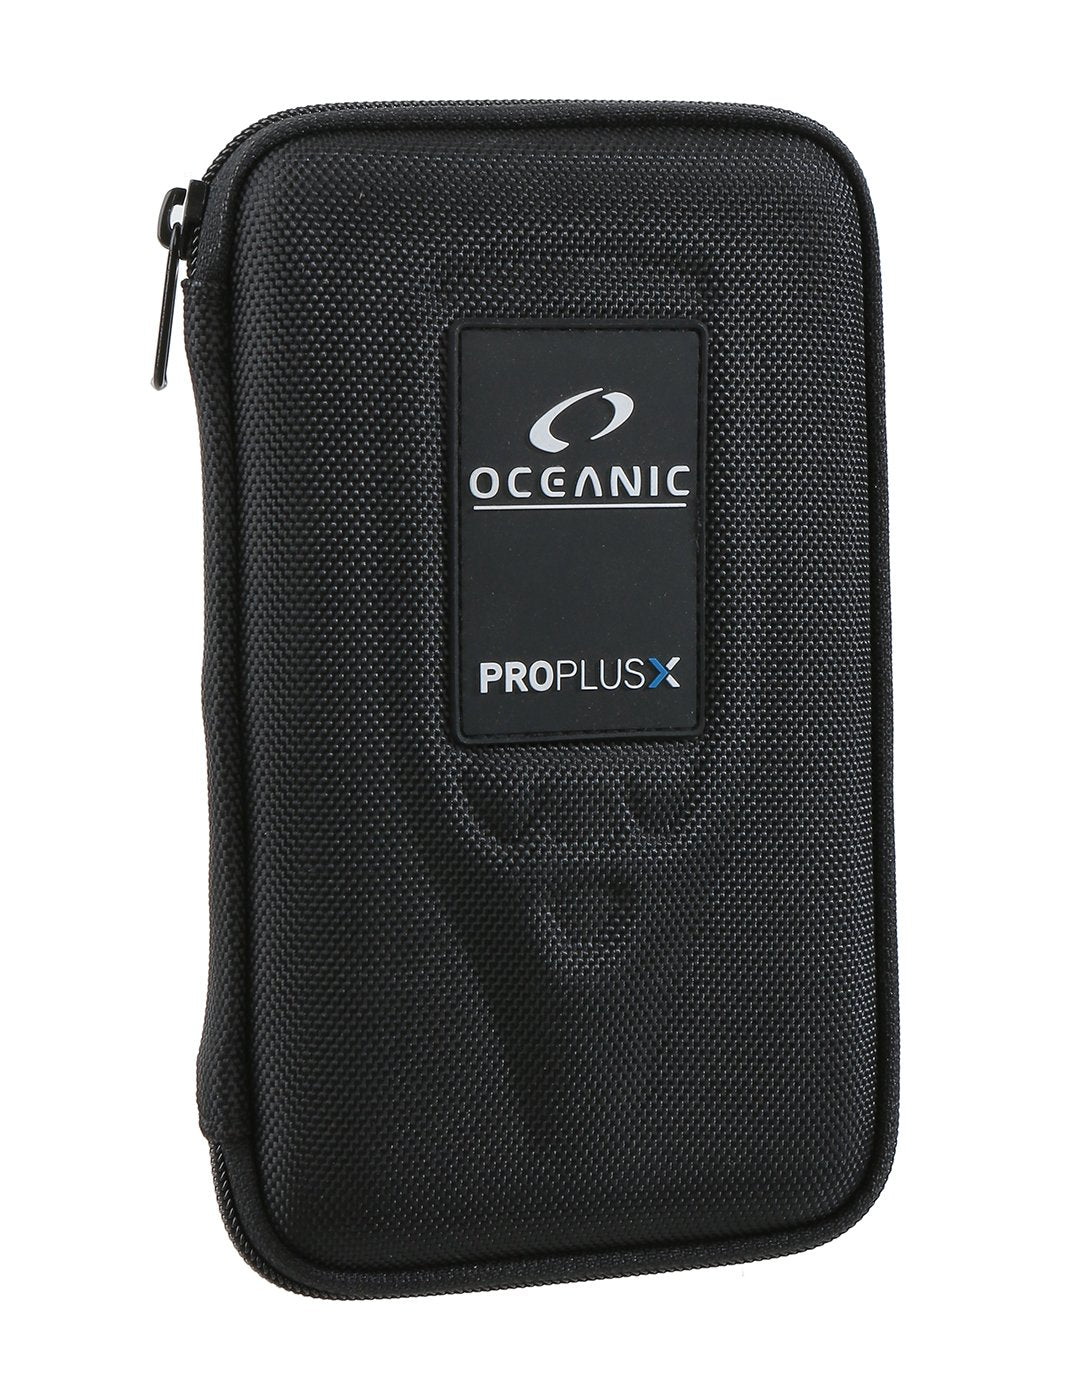 Oceanic Pro Plus X Dive Computer | Simply Scuba UK